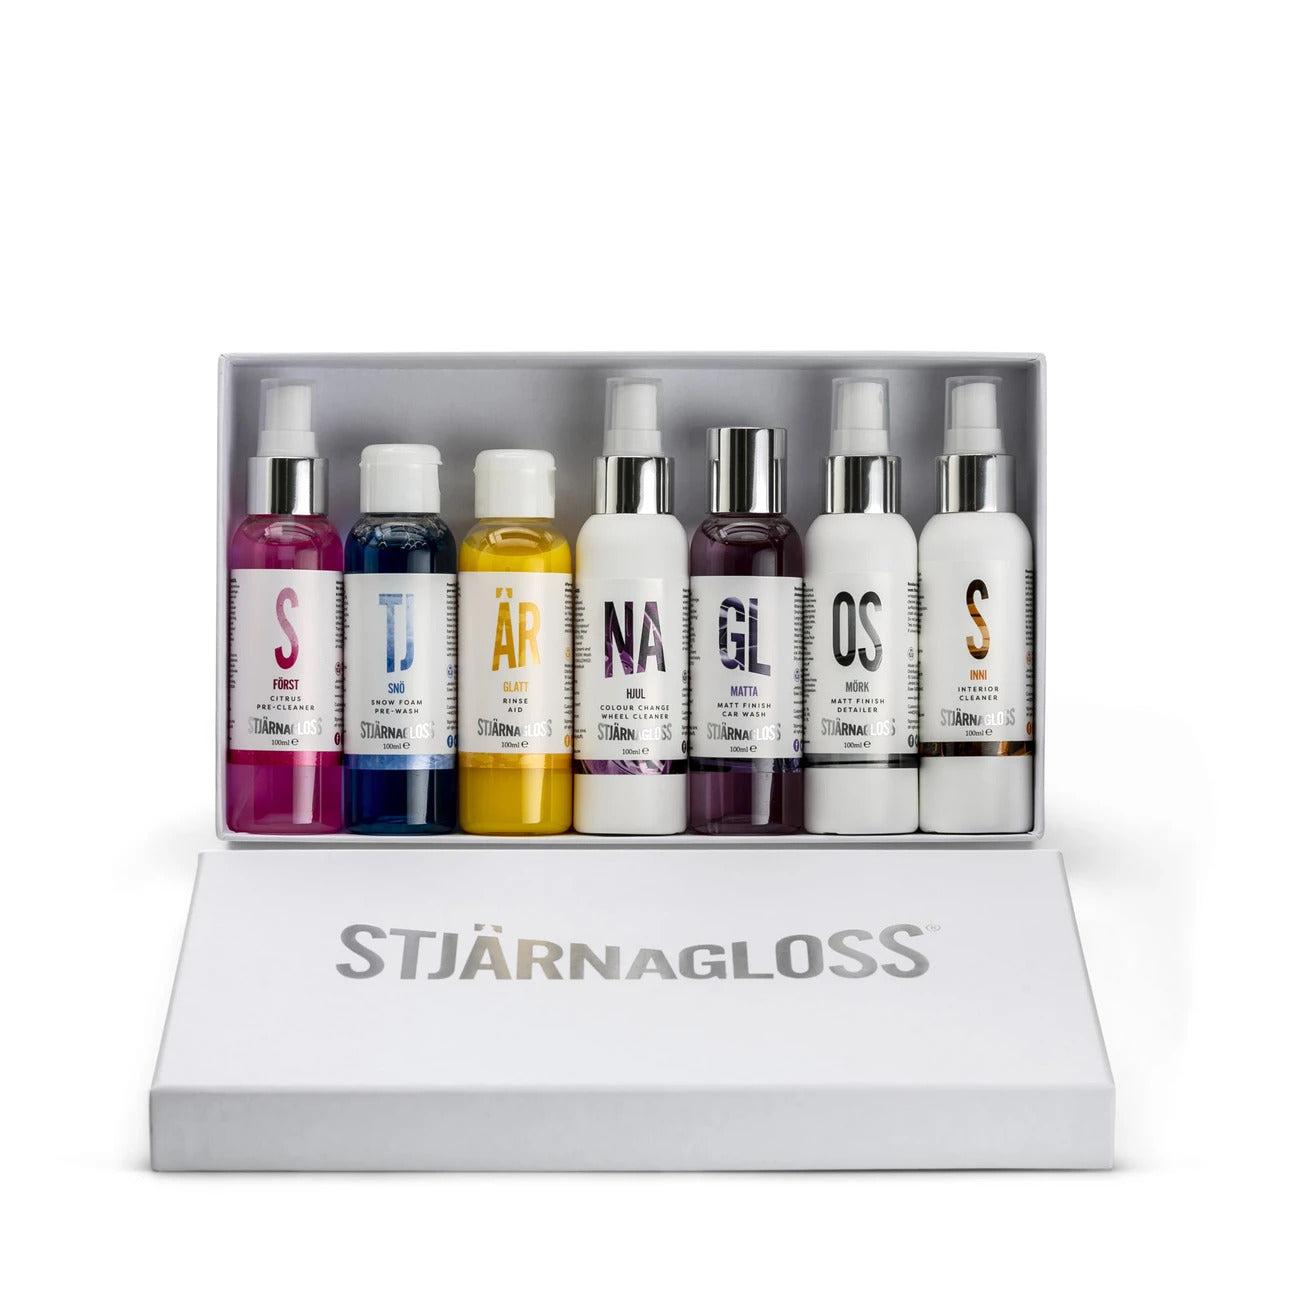 Stjarnagloss Specialist Gift Box - 7x100ml Presentation Pack - Advanced Detailing Stages Sampler